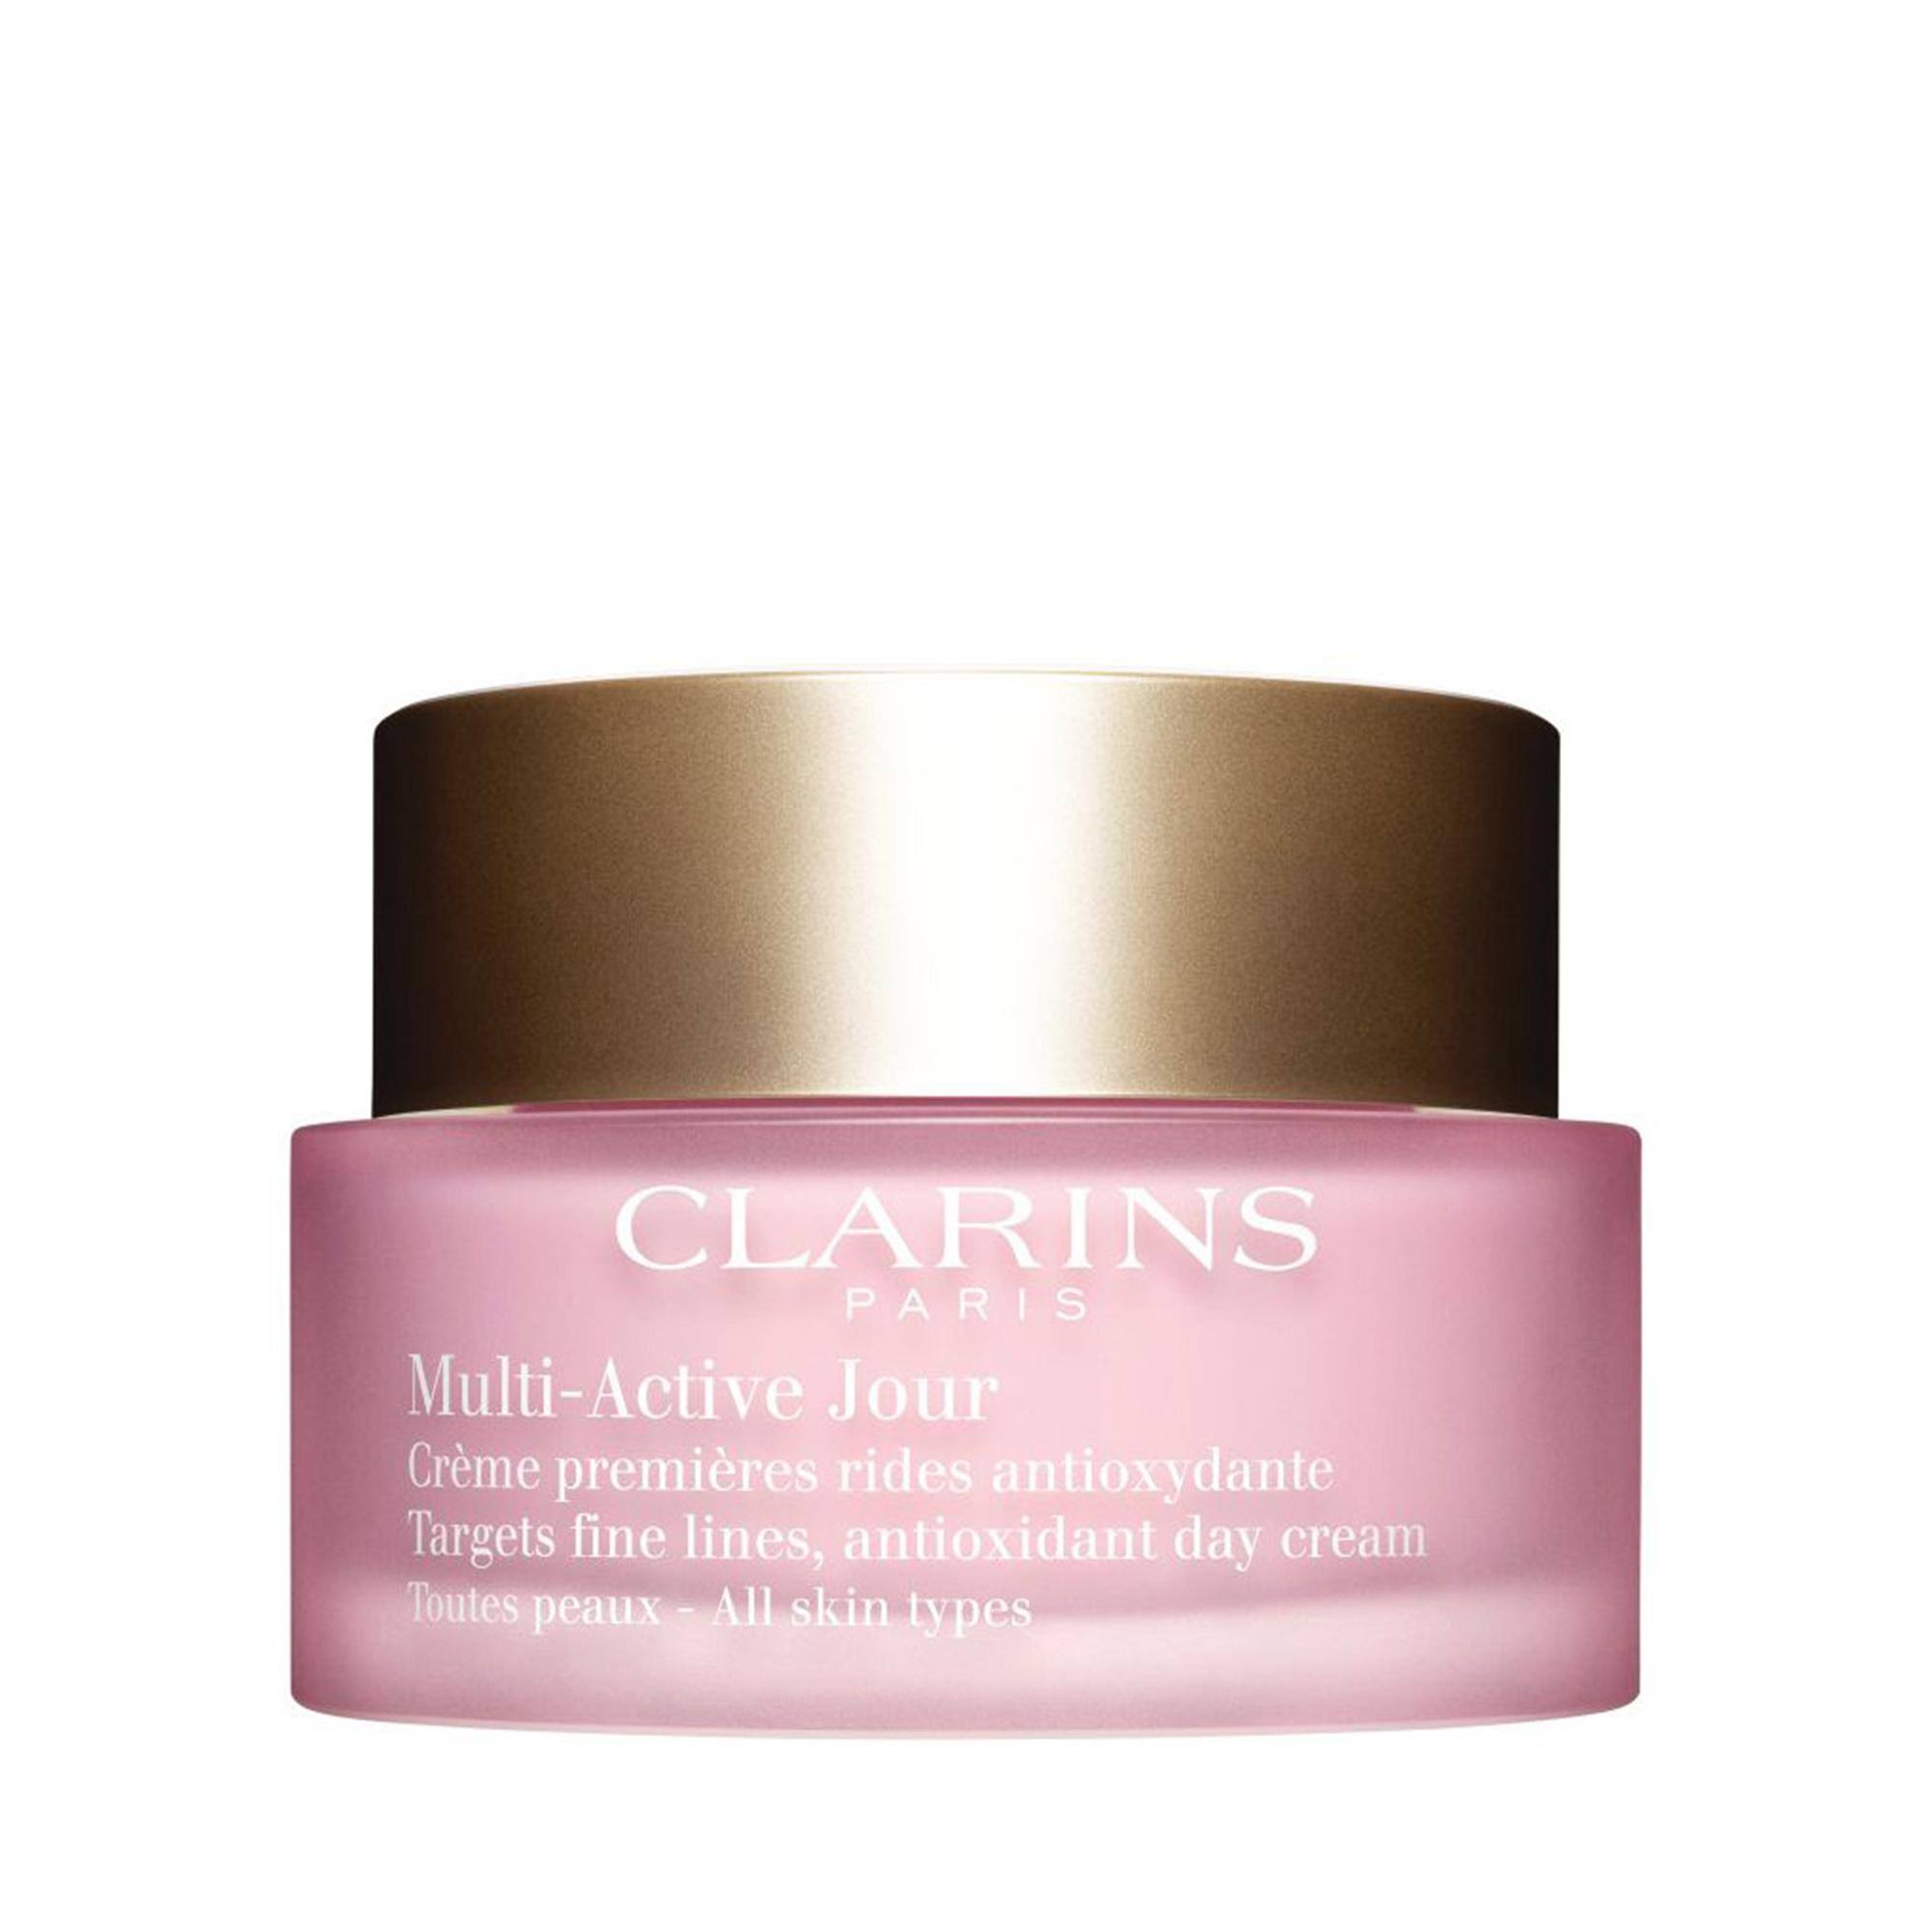 Clarins Multi-Active Jour Antioxidant Day Cream